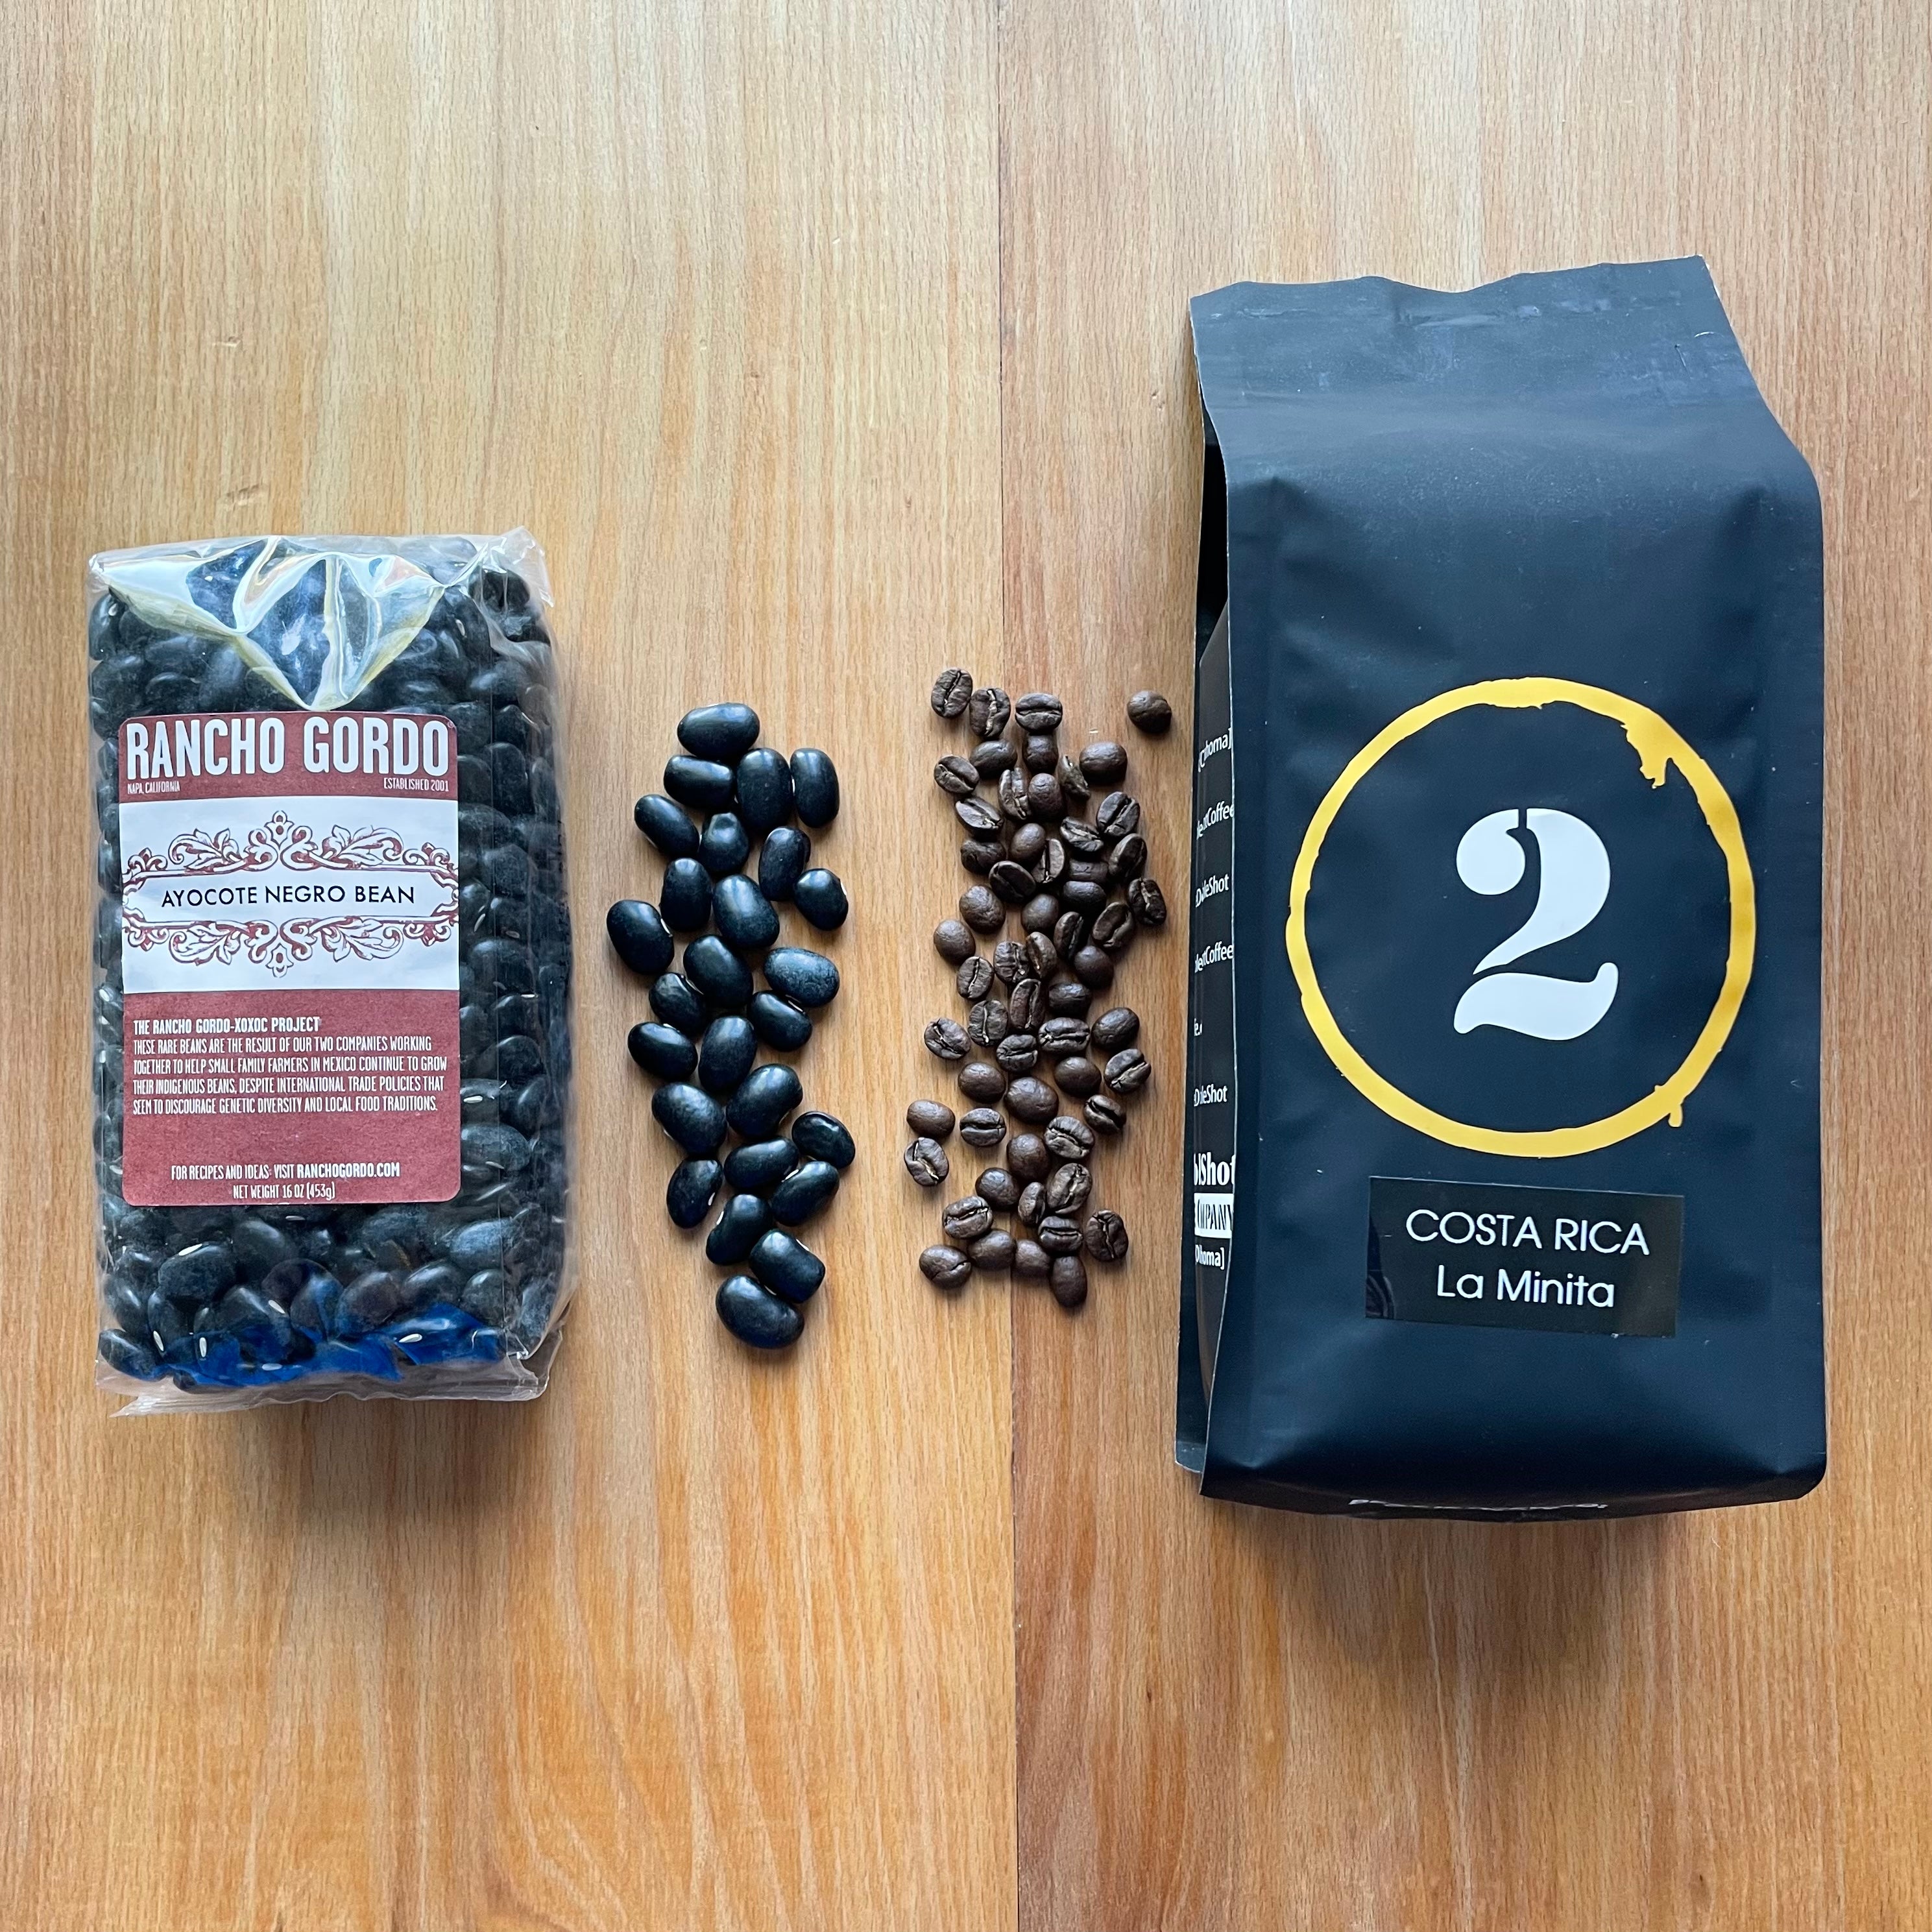 Shop Coffee — Double Shot Espresso Company Zanesville, OH Coffee Roastery